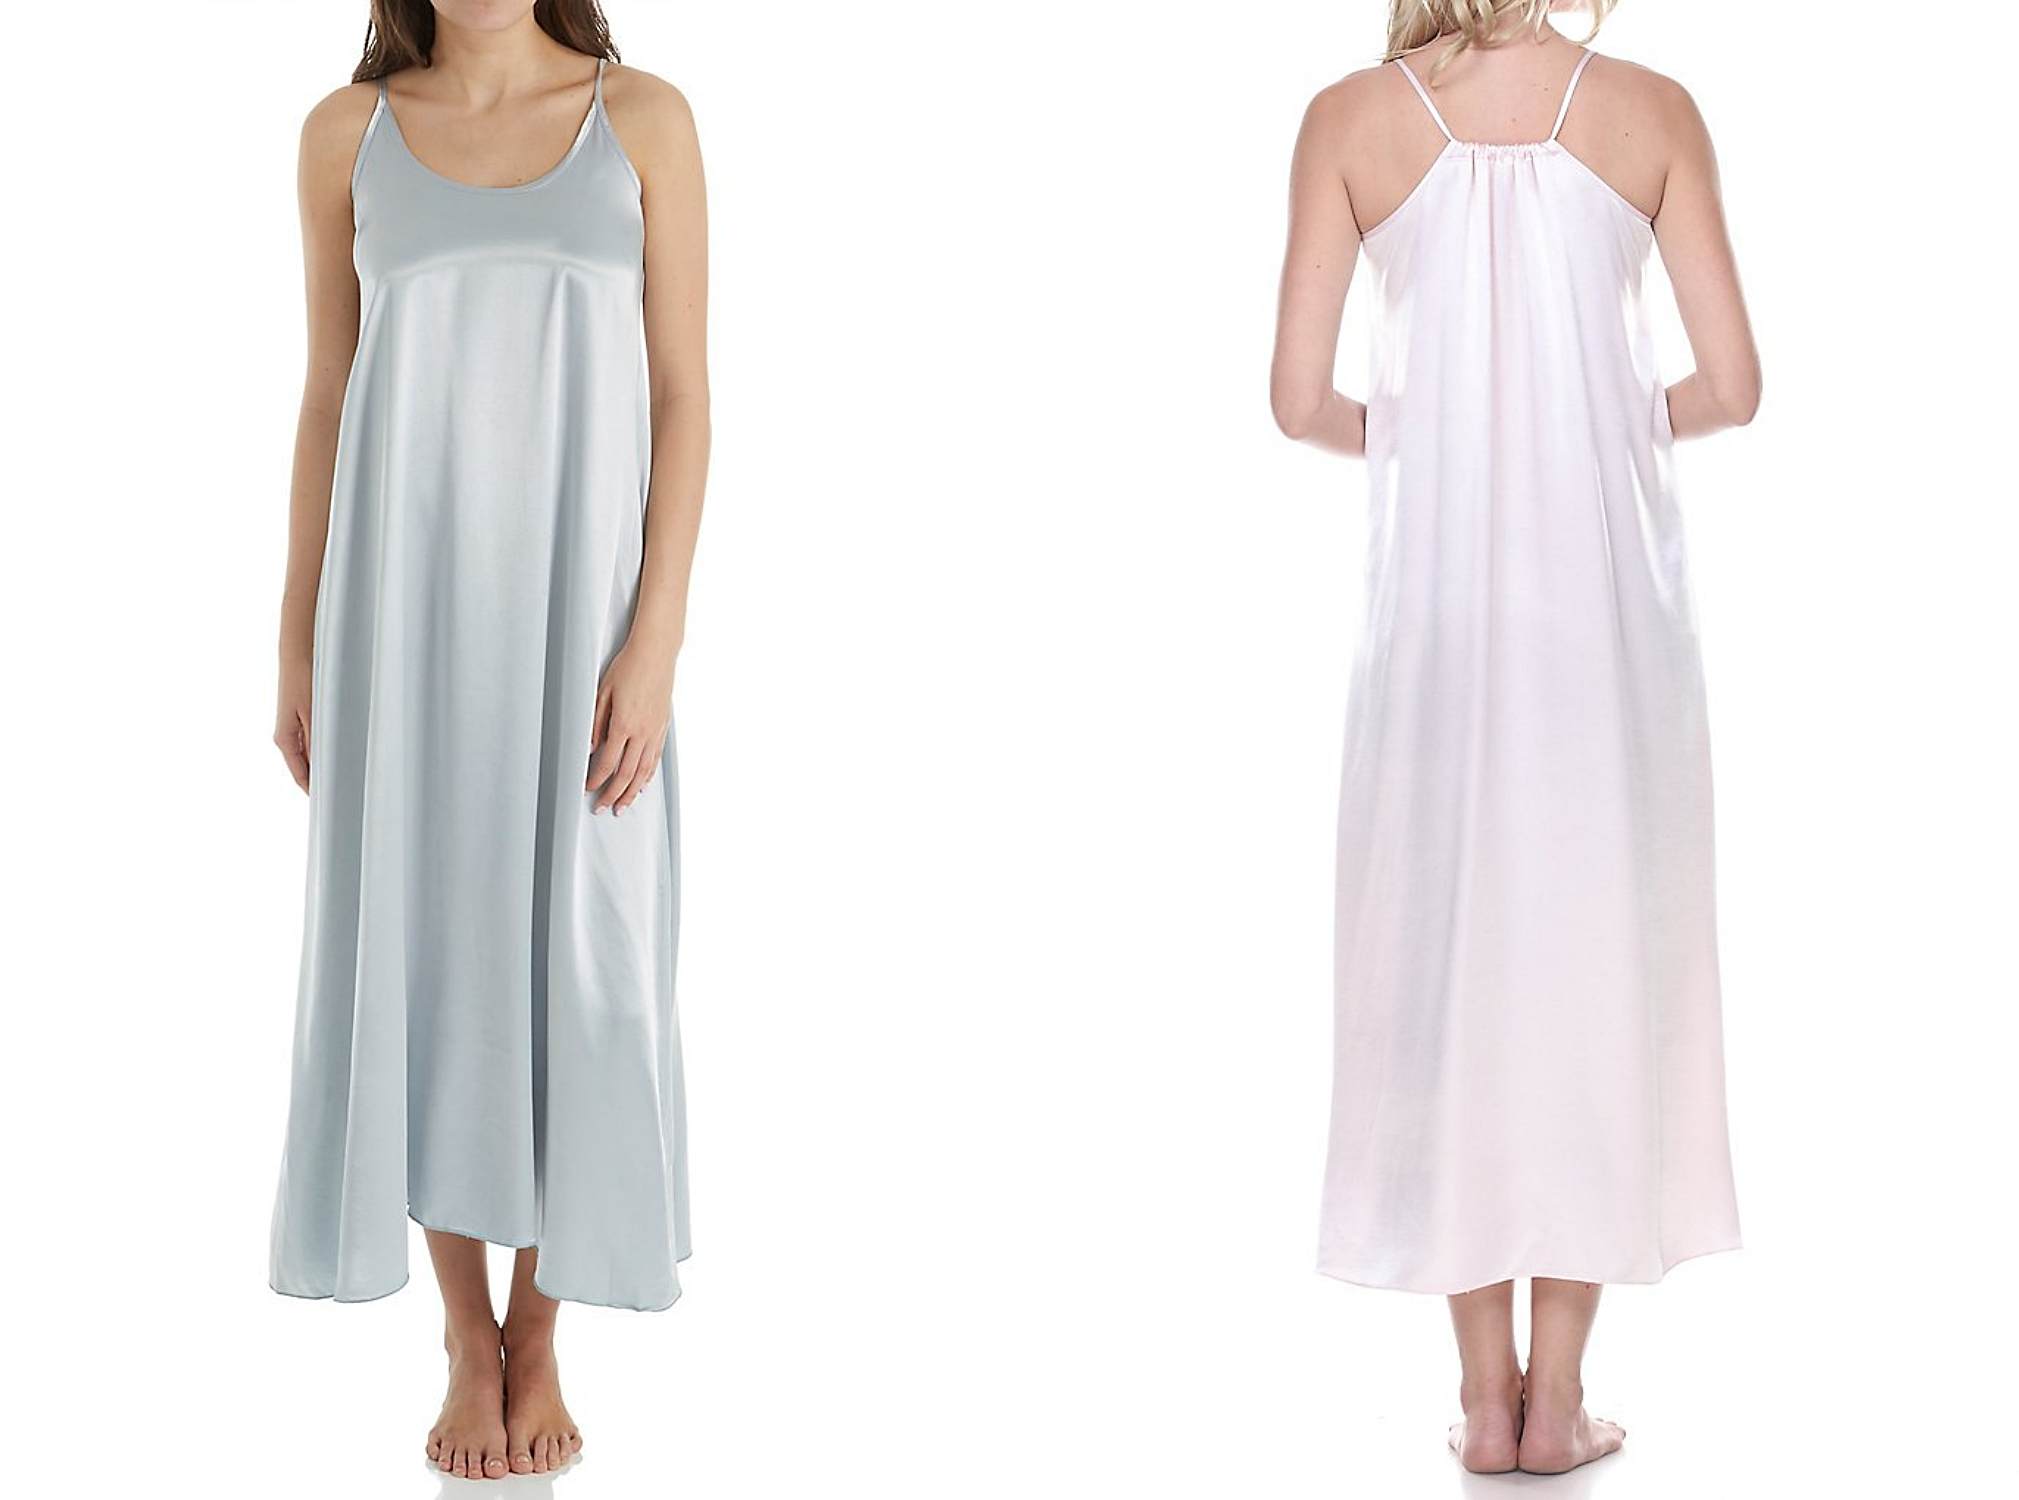 satin nightgowns